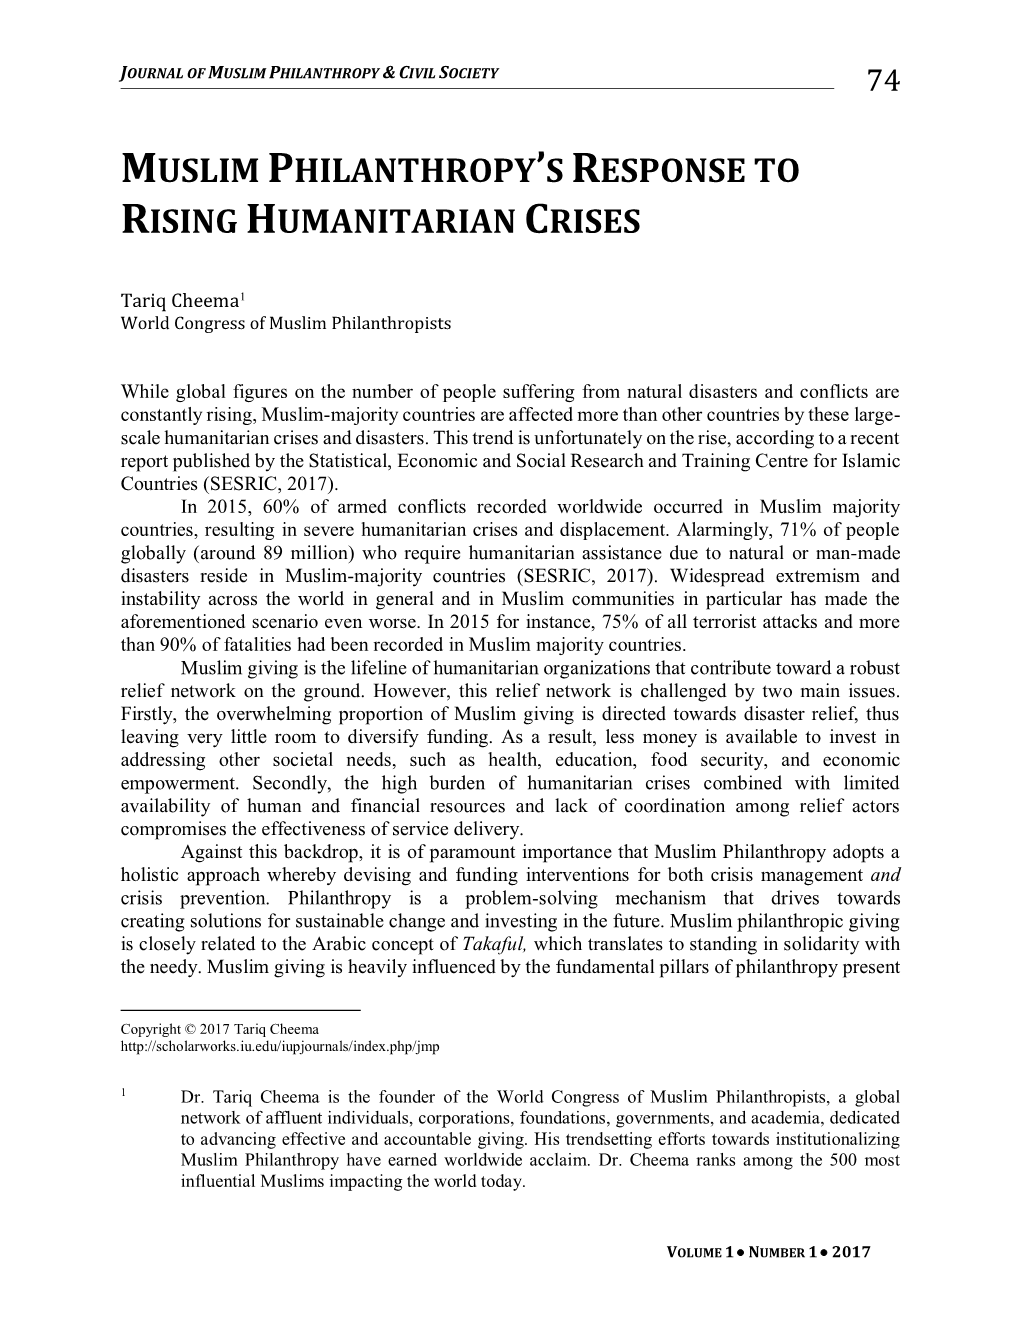 Muslim Philanthropy's Response to Rising